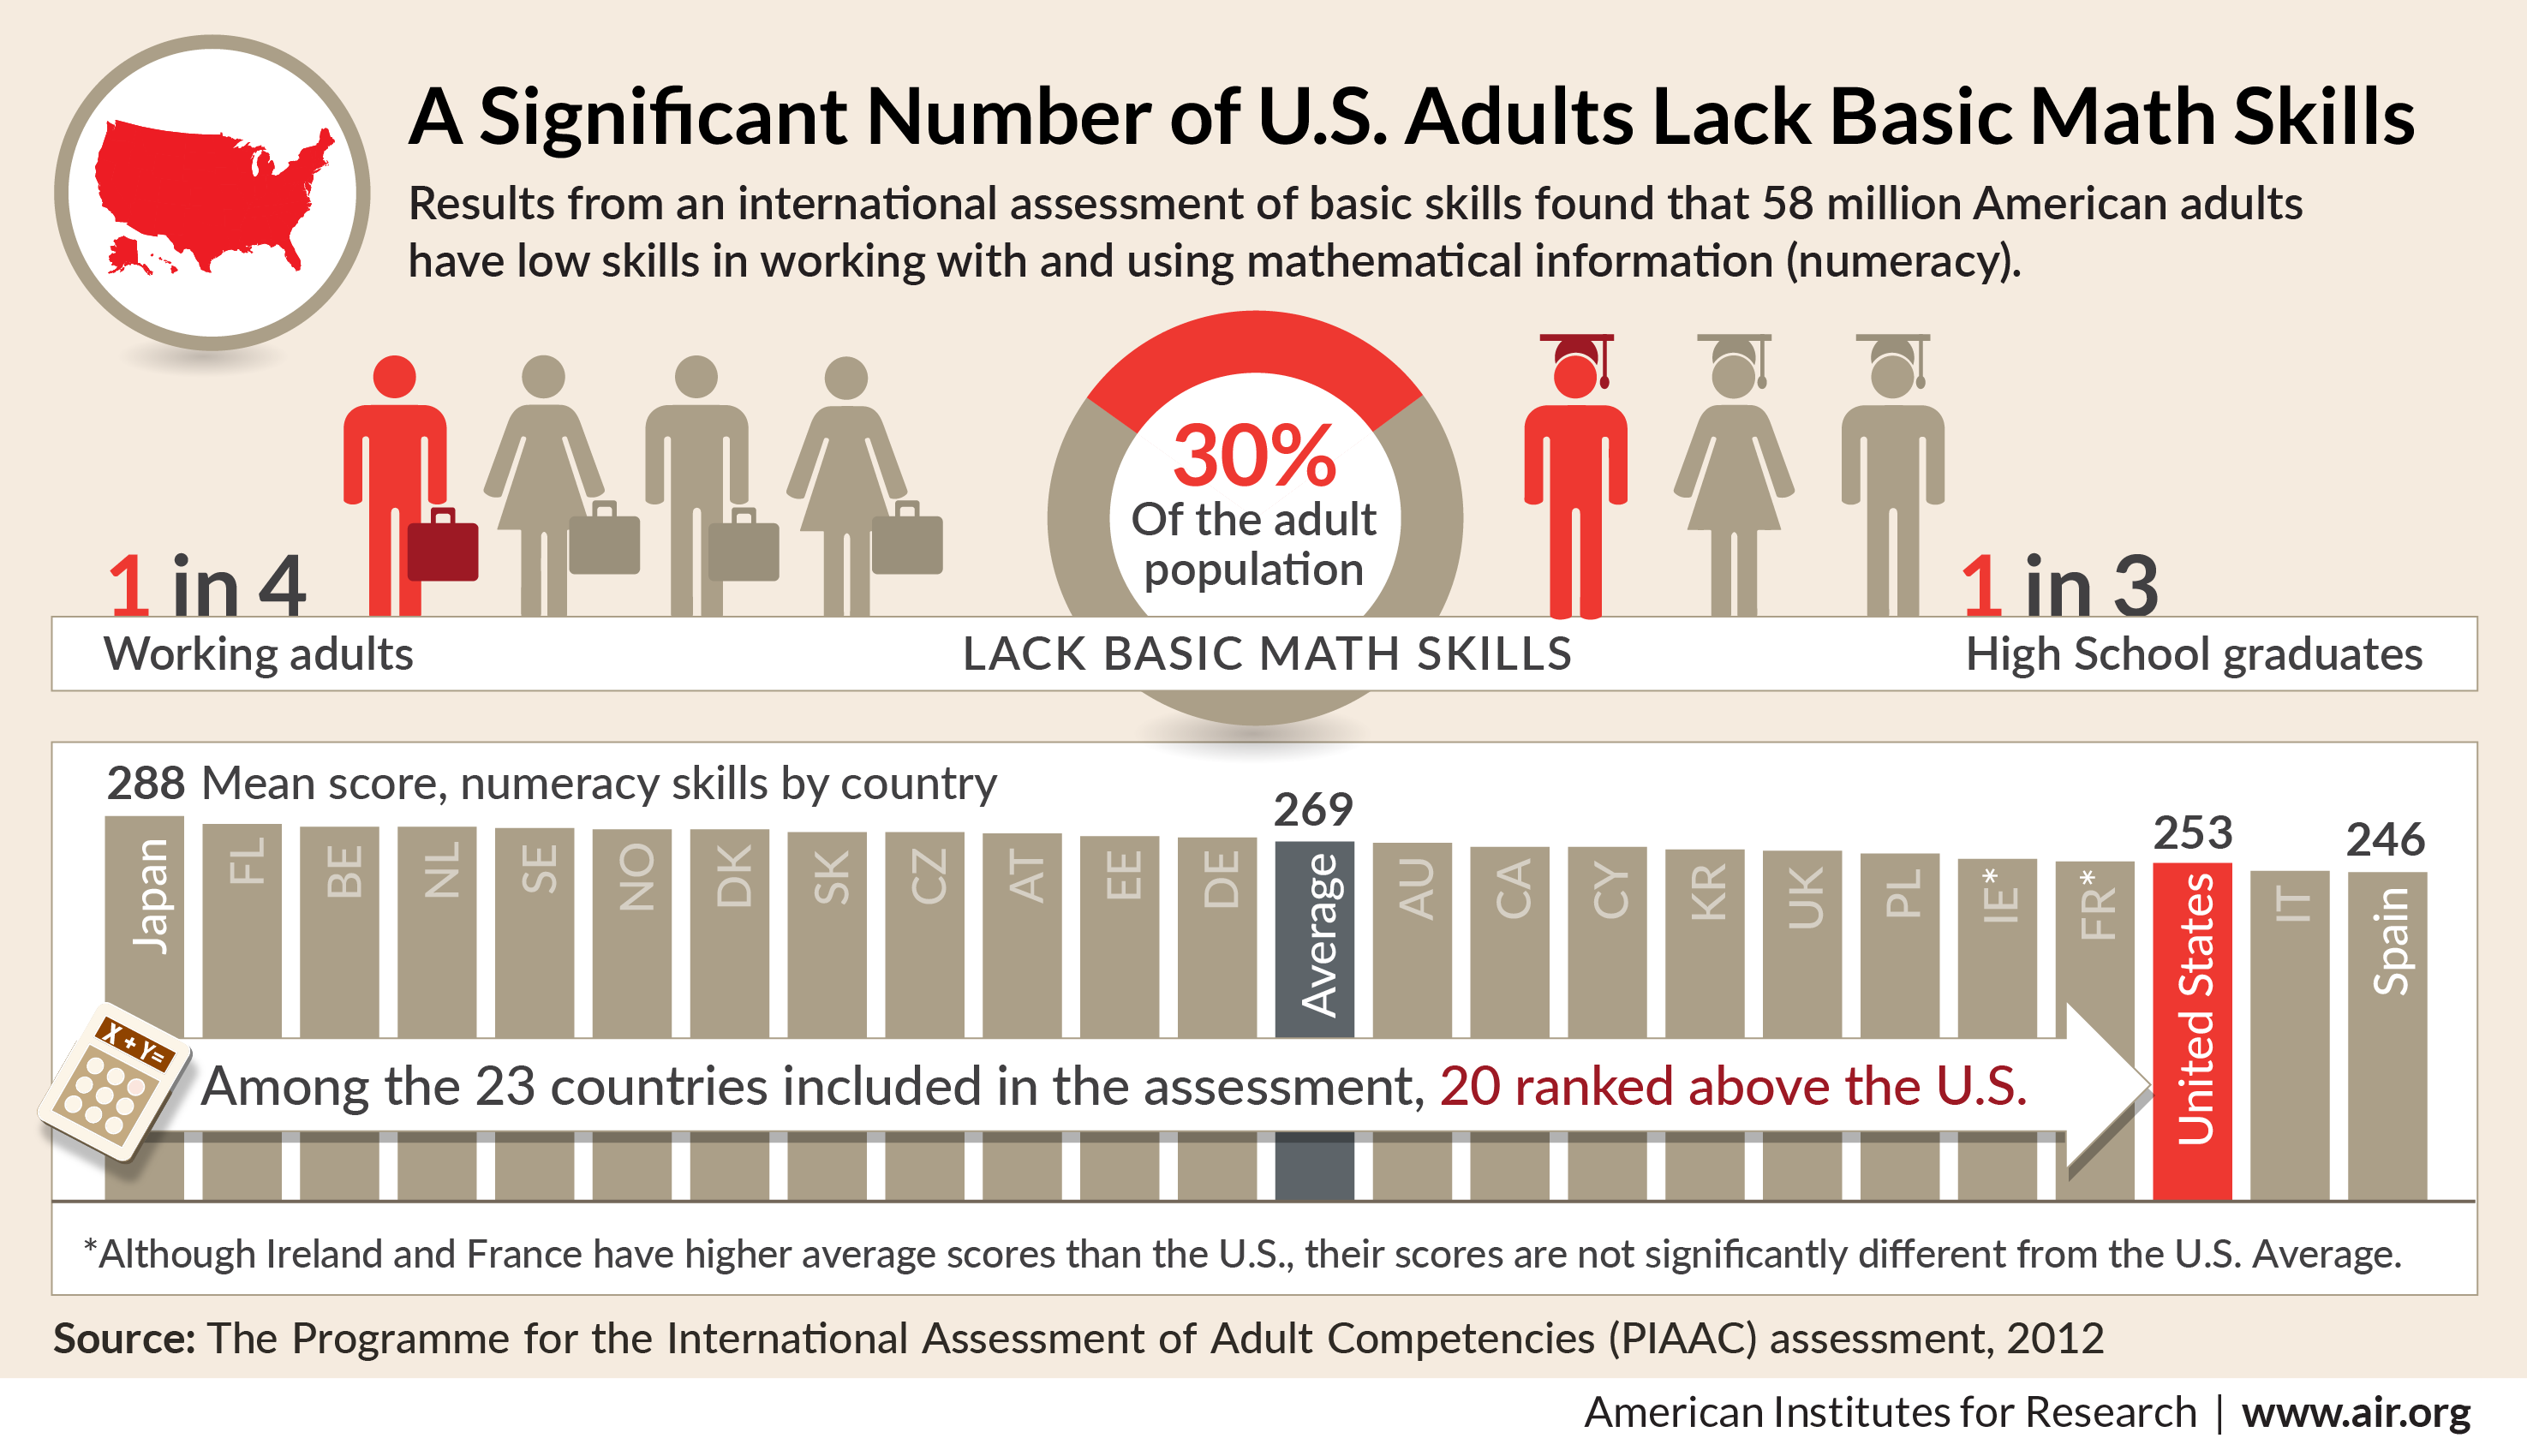 A significant number of U.S. adults lack basic math skills